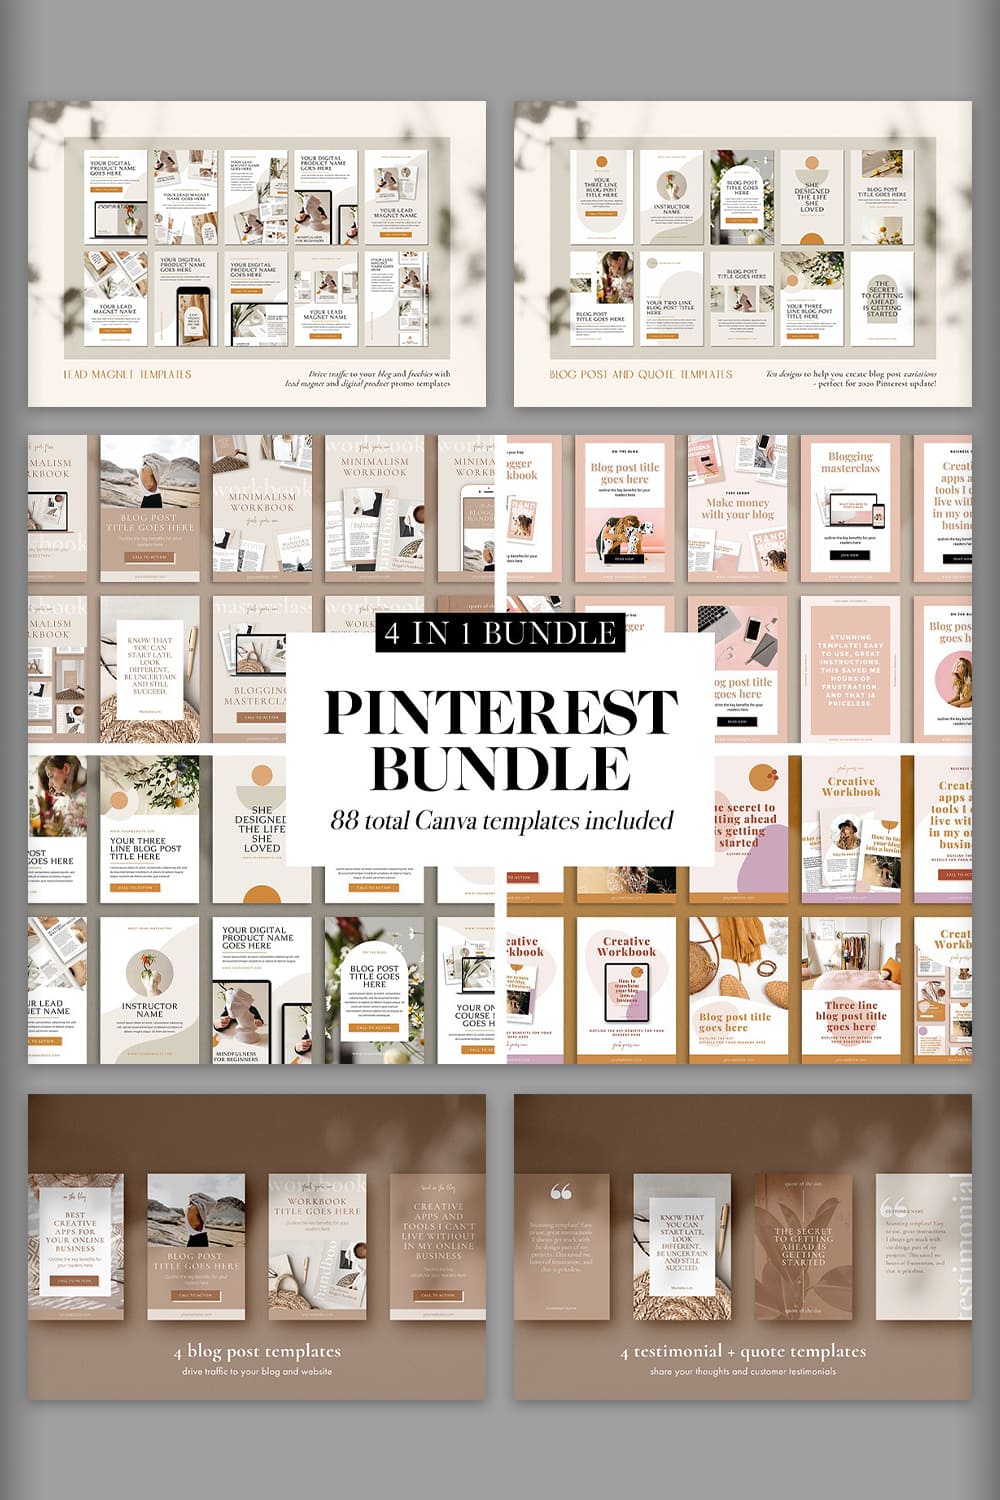 Pinterest - 4 in 1 Pinterest Template Bundle.